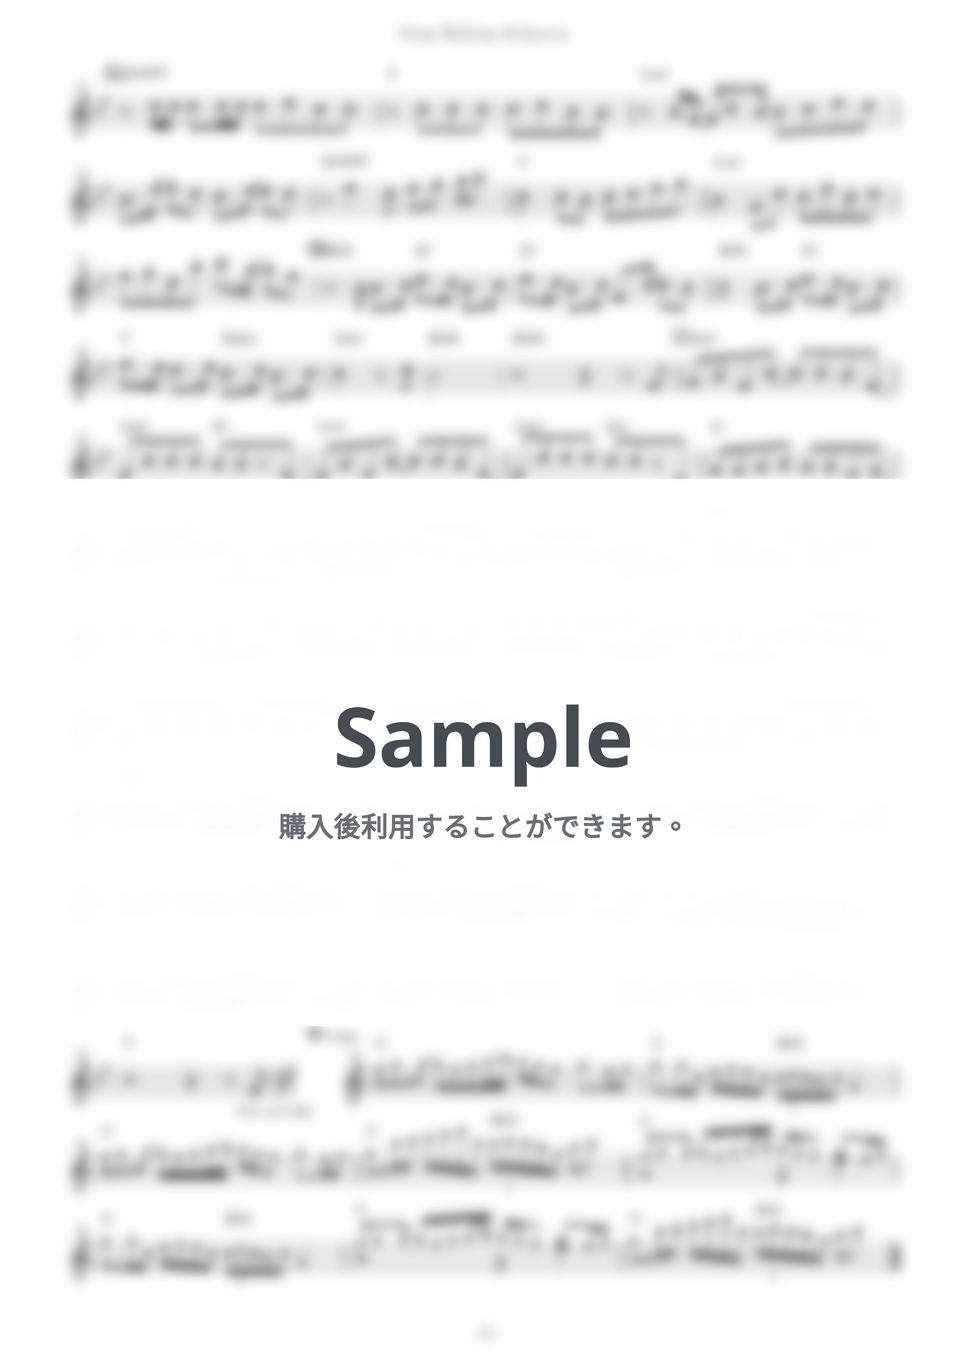 BUMP OF CHICKEN - Sleep Walking Orchestra (『ダンジョン飯』 / in Eb) by muta-sax